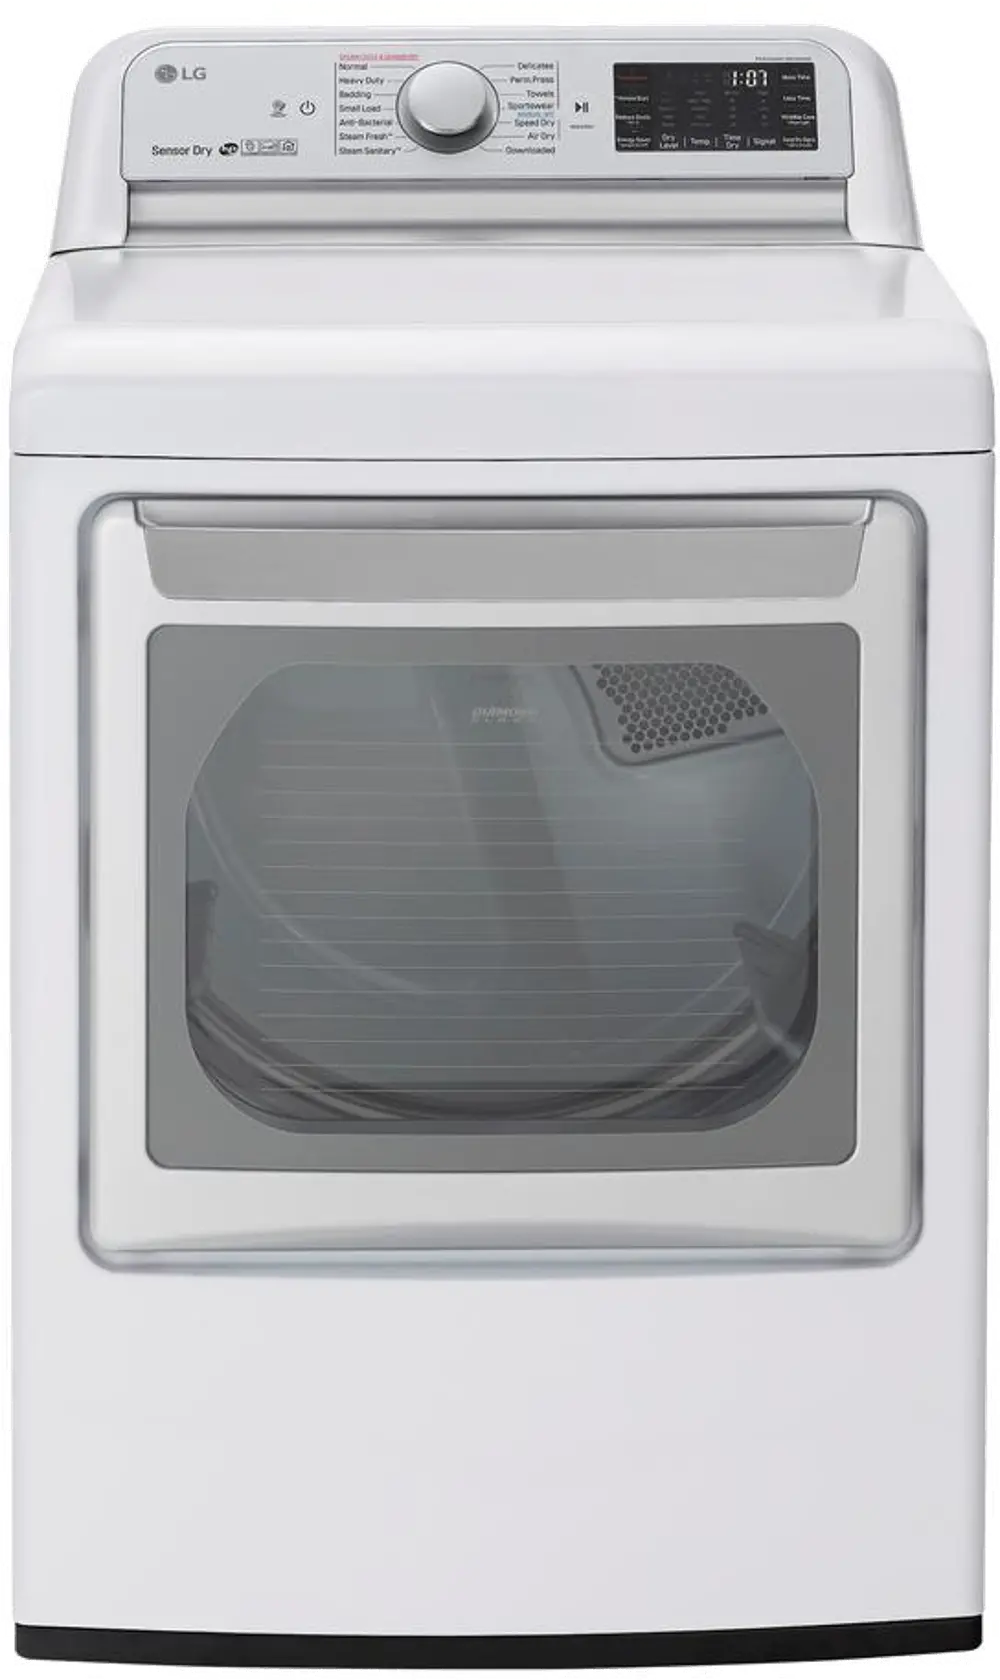 DLGX7801WE LG WiFi Gas Dryer with TurboSteam - White 7.3 cu.ft.-1